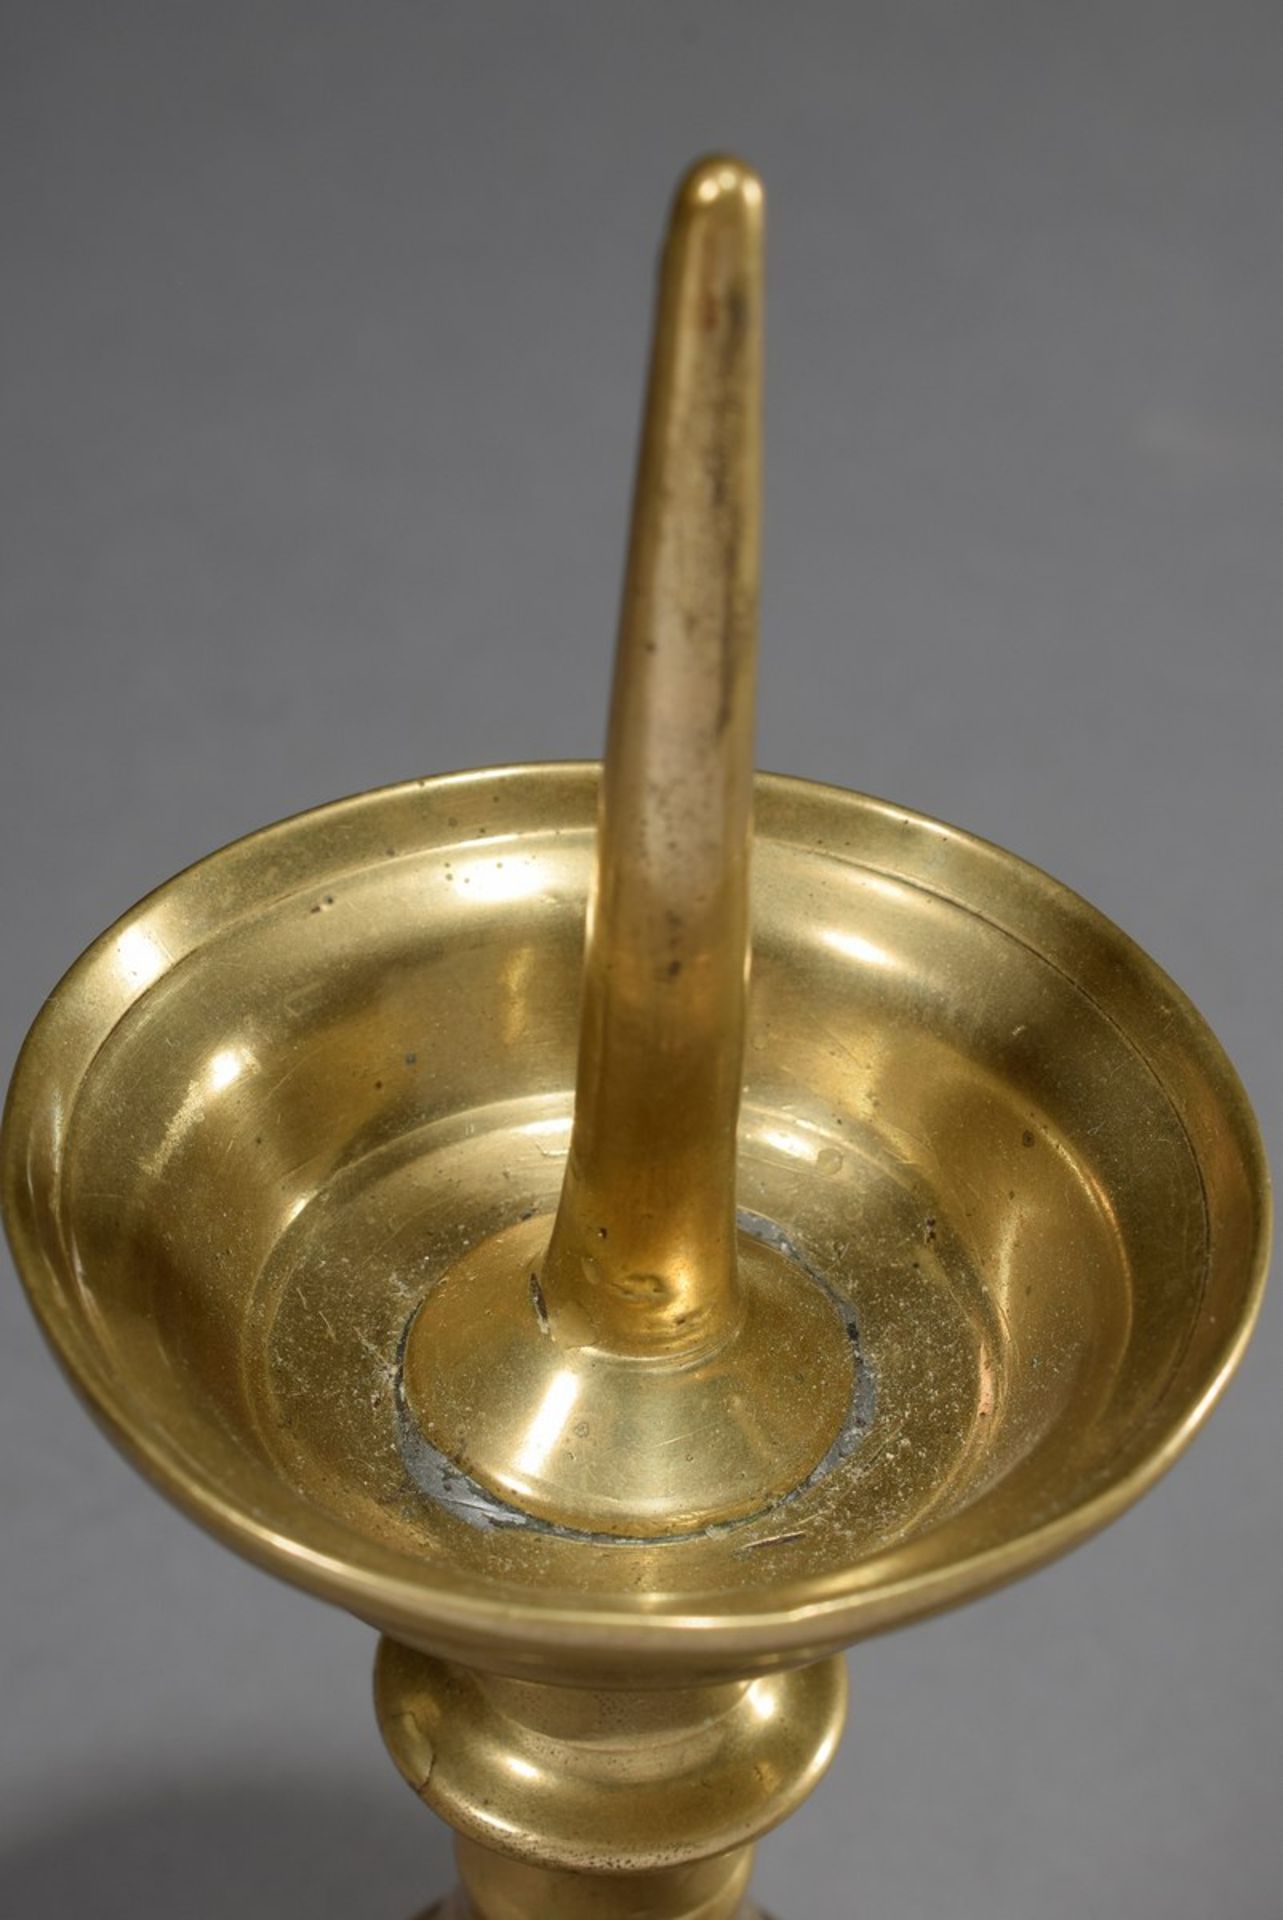 Antiker Gelbguss Leuchter mit abgetreppten Wülst | Antique brass candlestick with stepped beads and - Image 2 of 3